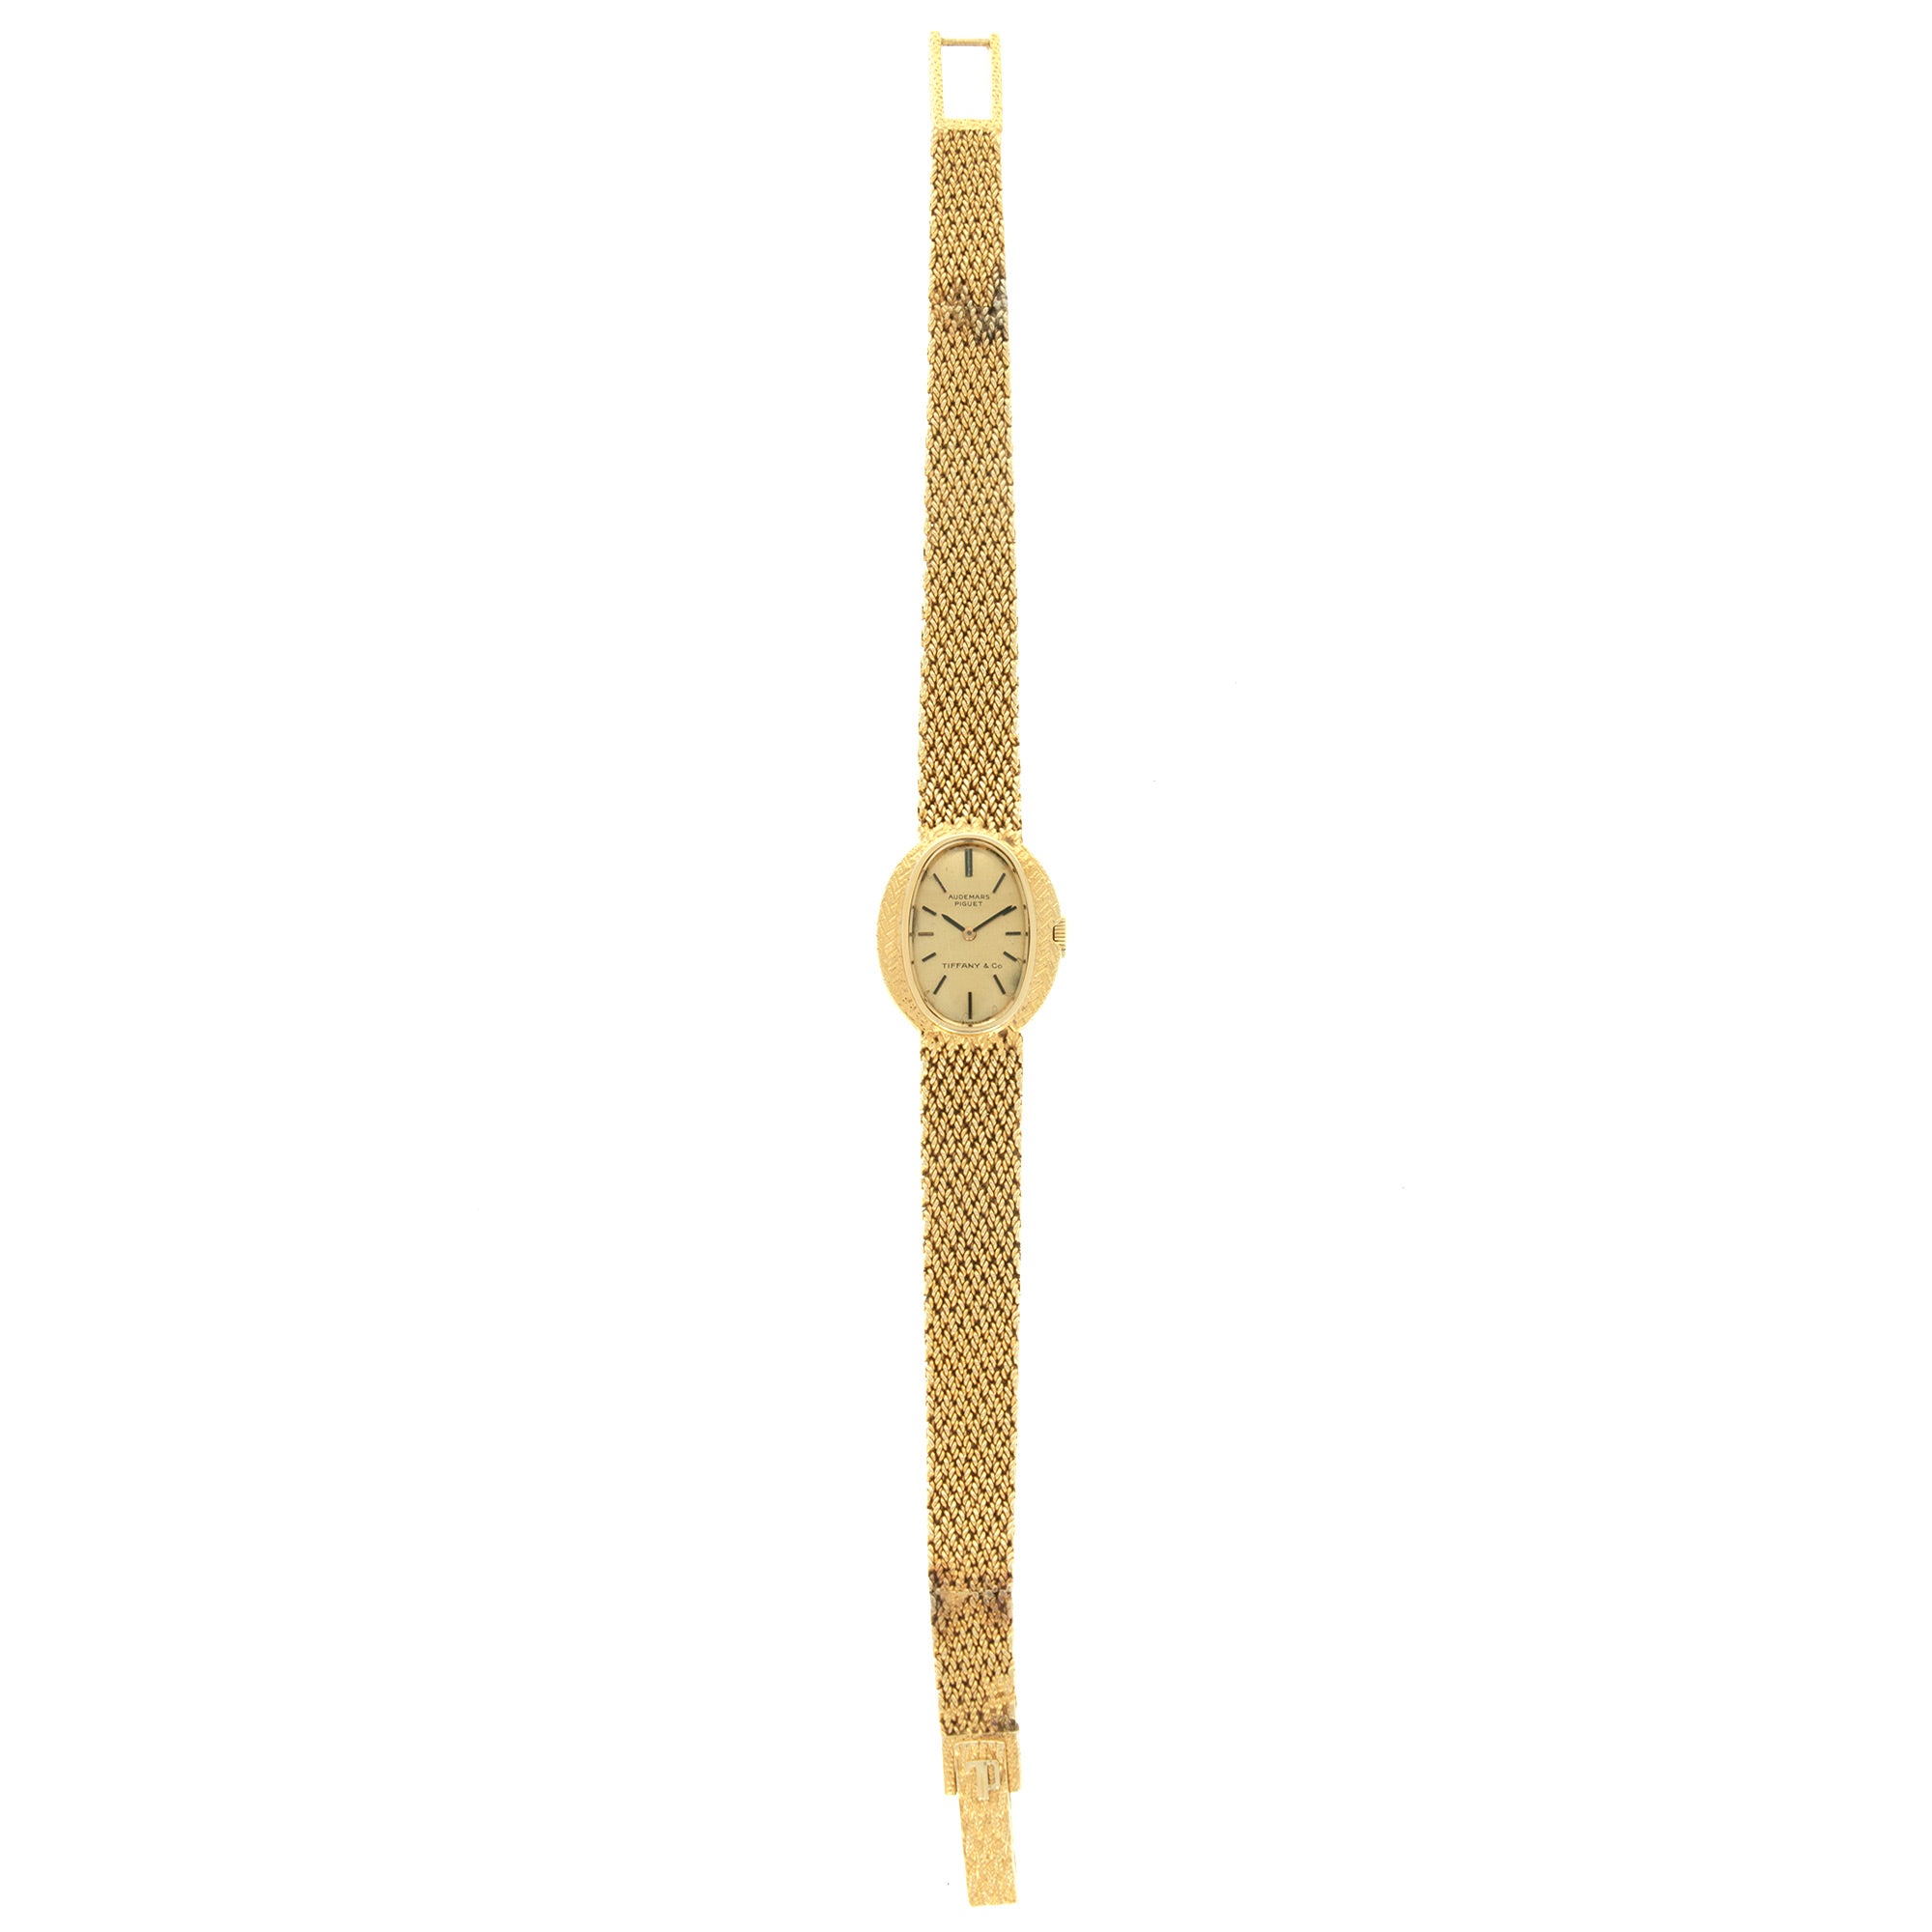 Audemars Piguet - Audemars Piguet Yellow Gold Bracelet Watch, Retailed by Tiffany & Co. - The Keystone Watches